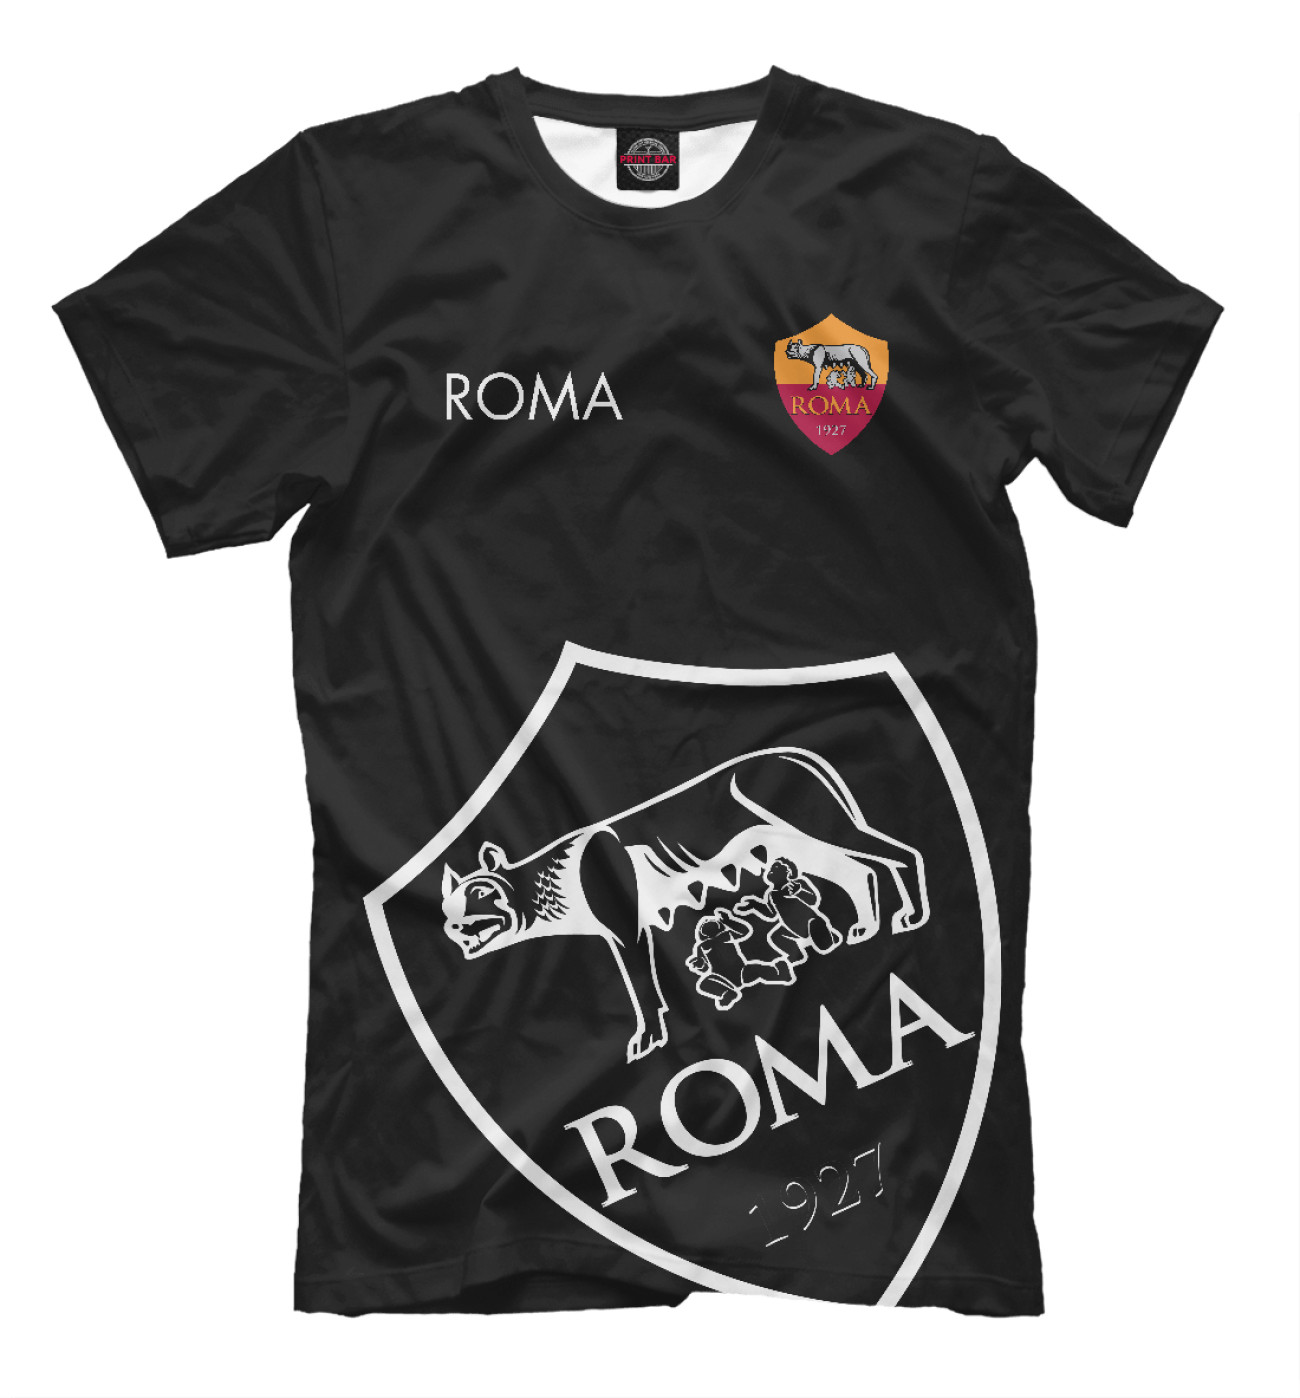 Мужская Футболка Roma, артикул: RMA-156642-fut-2